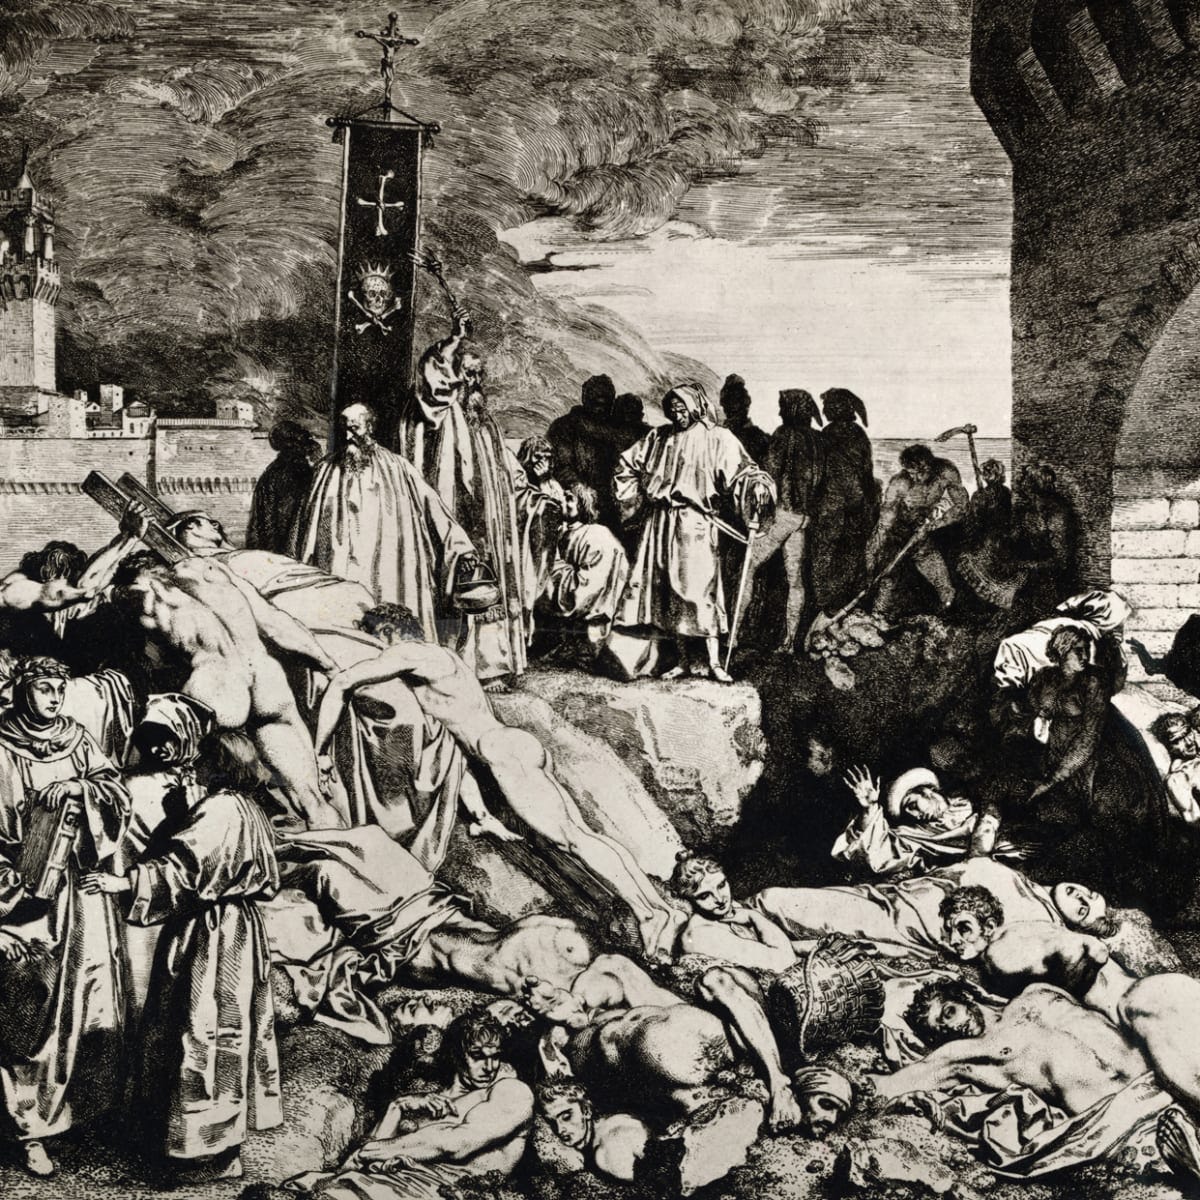 Black Death - Causes, Symptoms & Impact - HISTORY